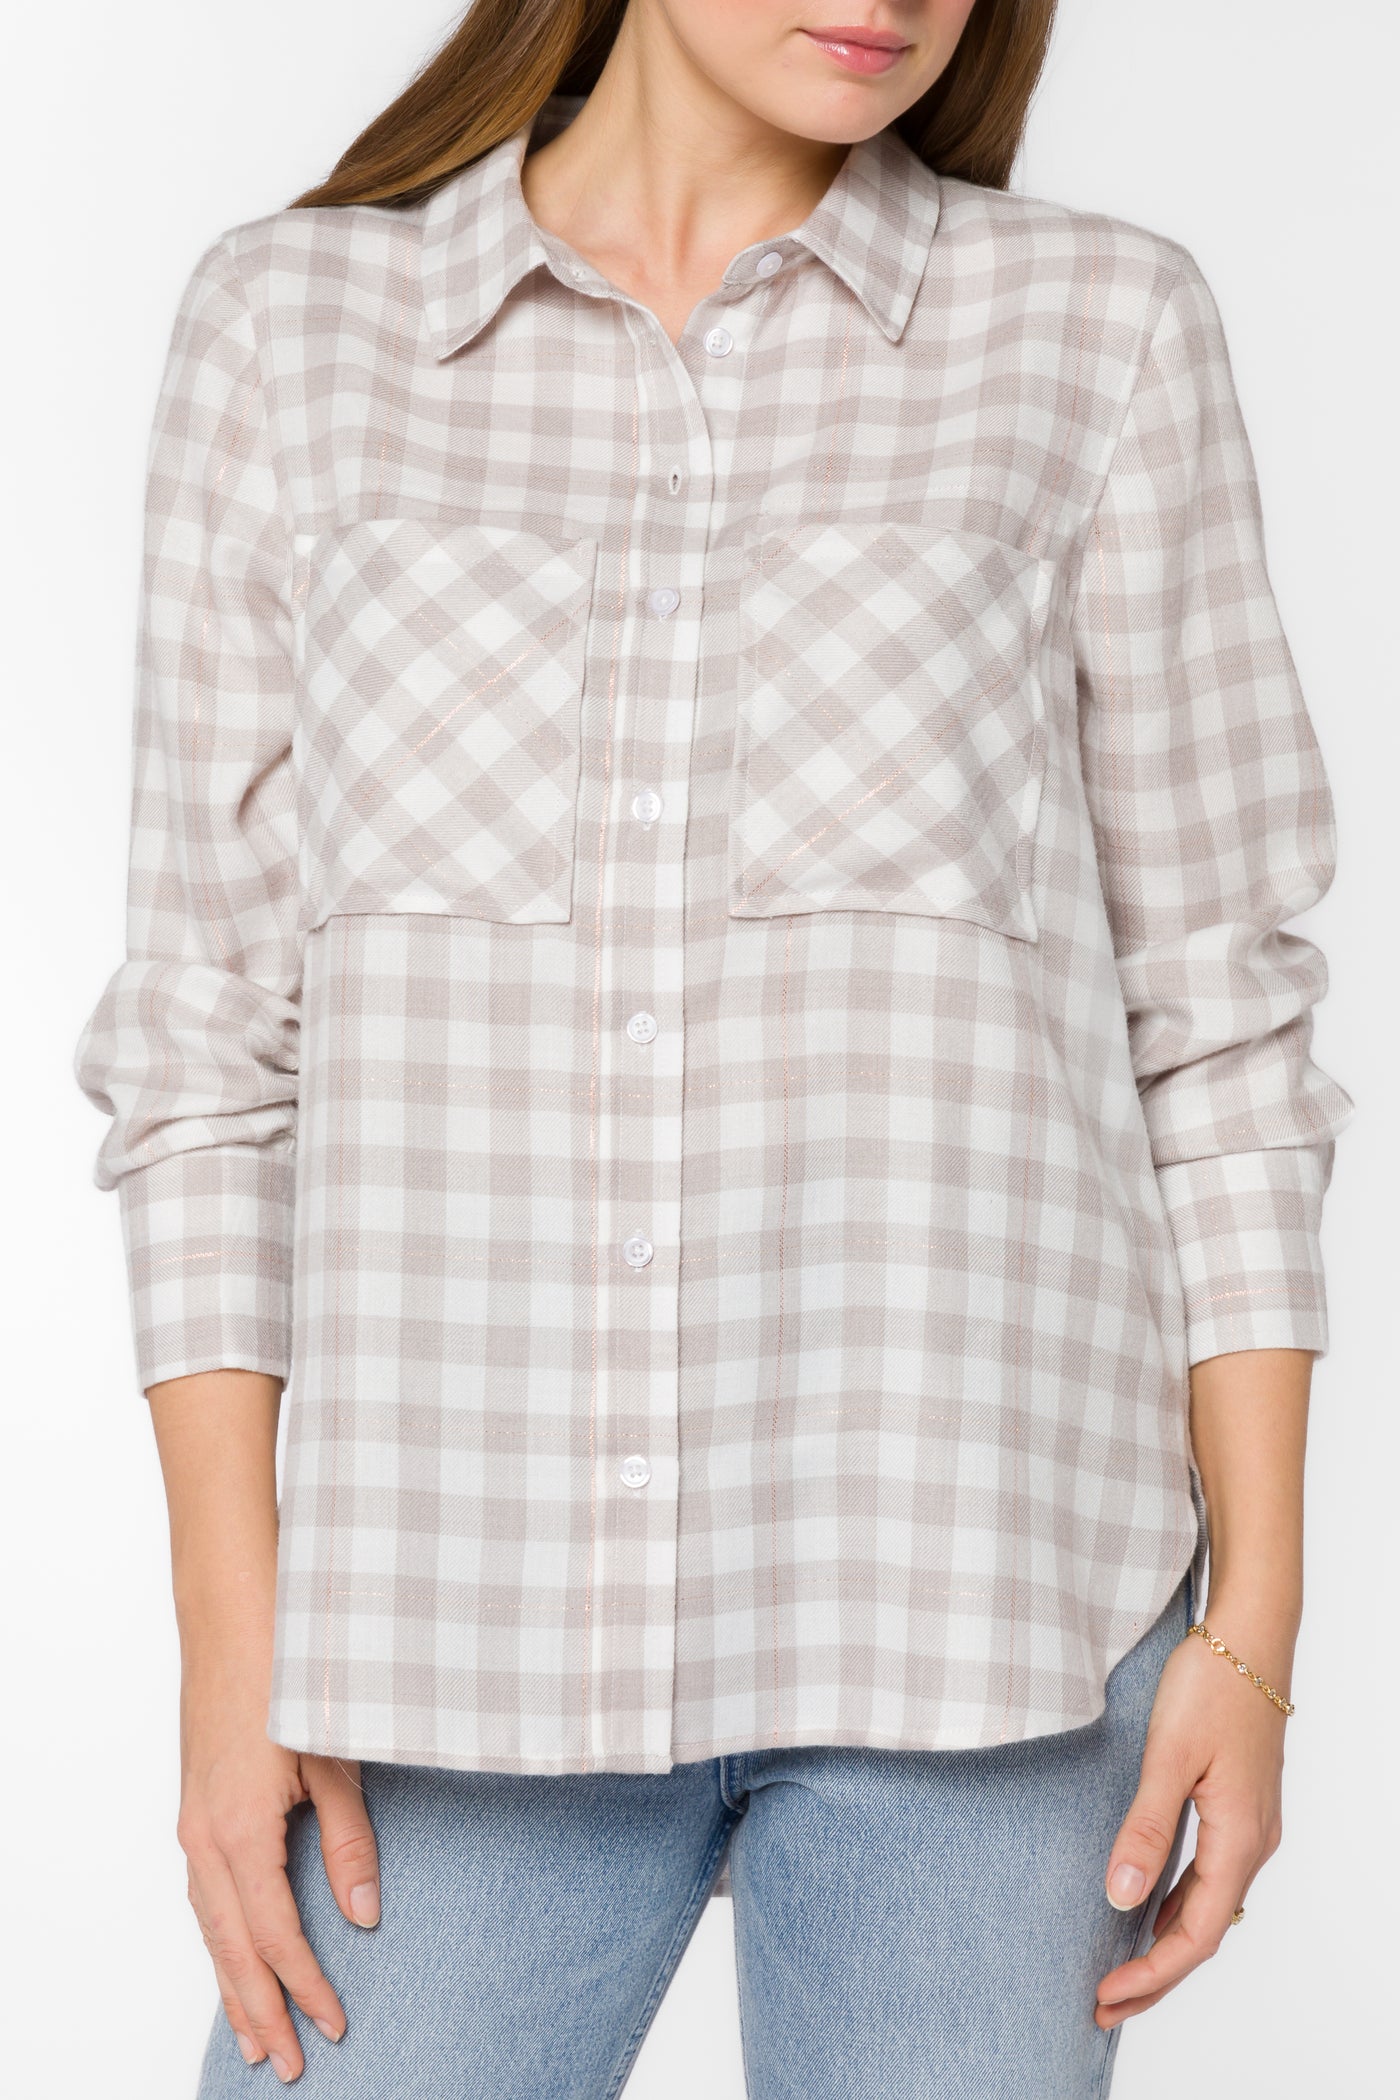 Kacia Taupe Plaid Shirt - Tops - Velvet Heart Clothing